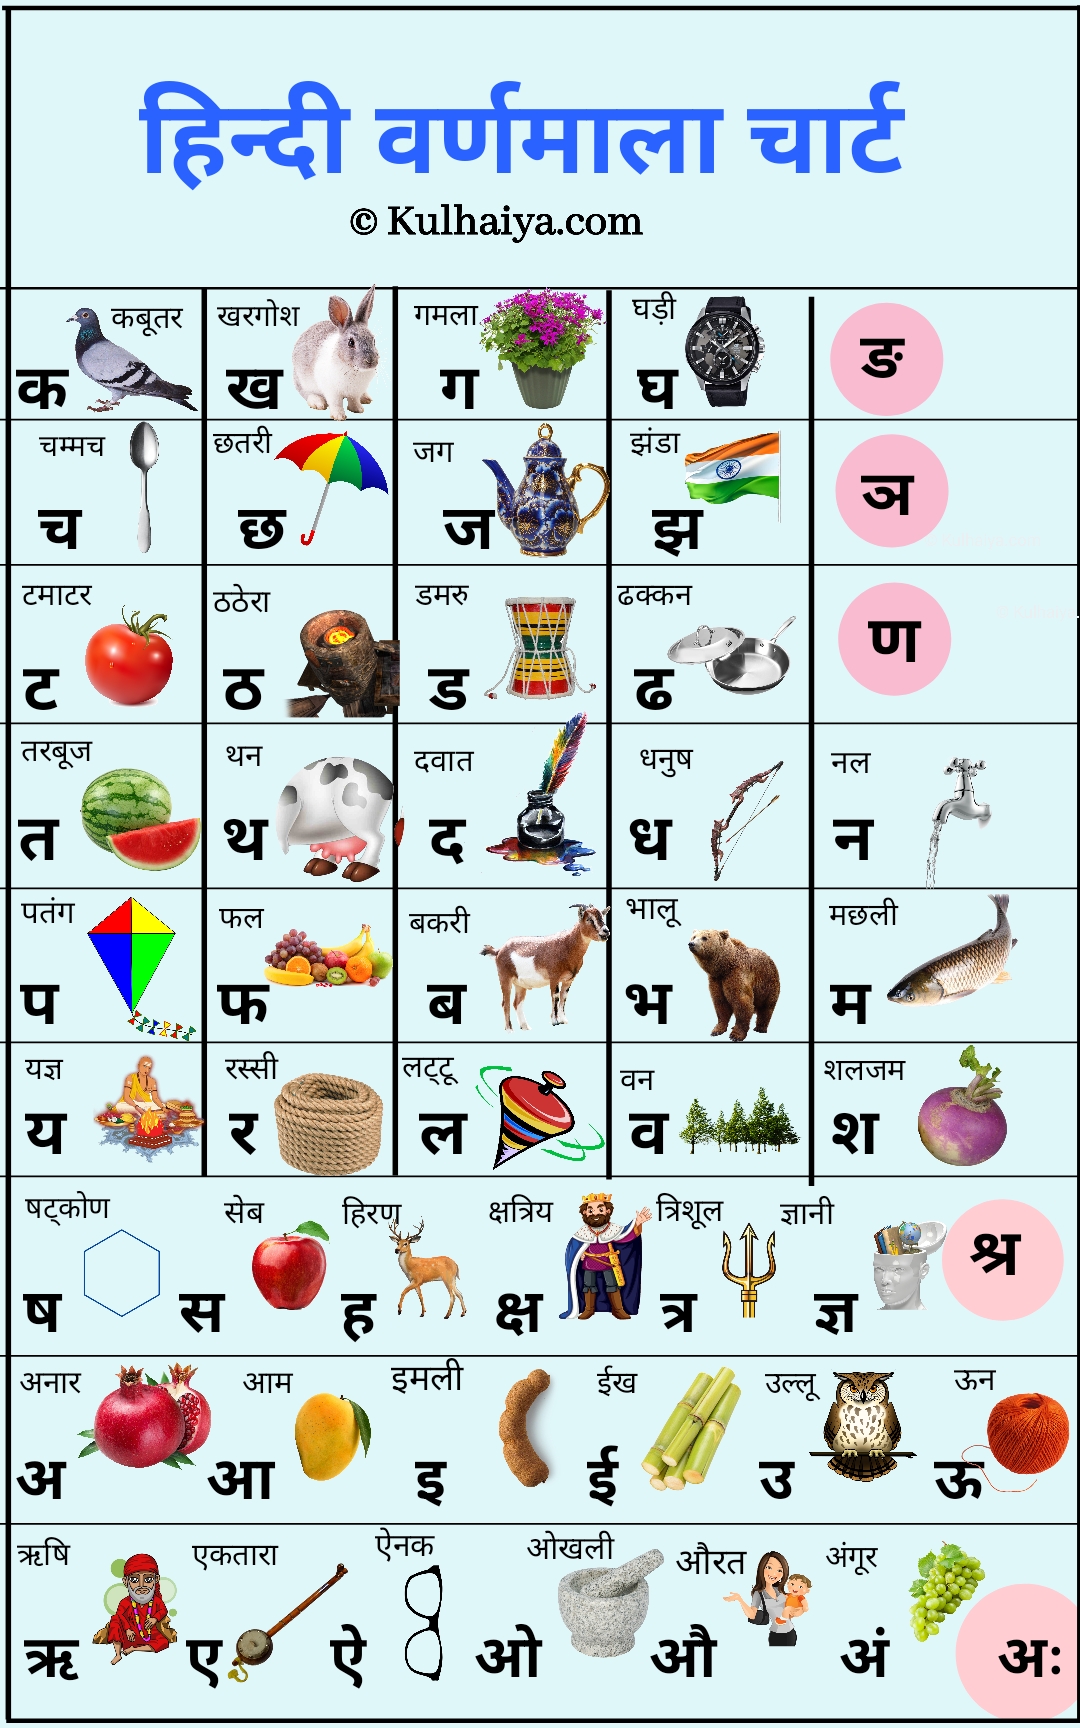 Alphabets In Hindi: वर्ण, स्वर, व्यंजन ...